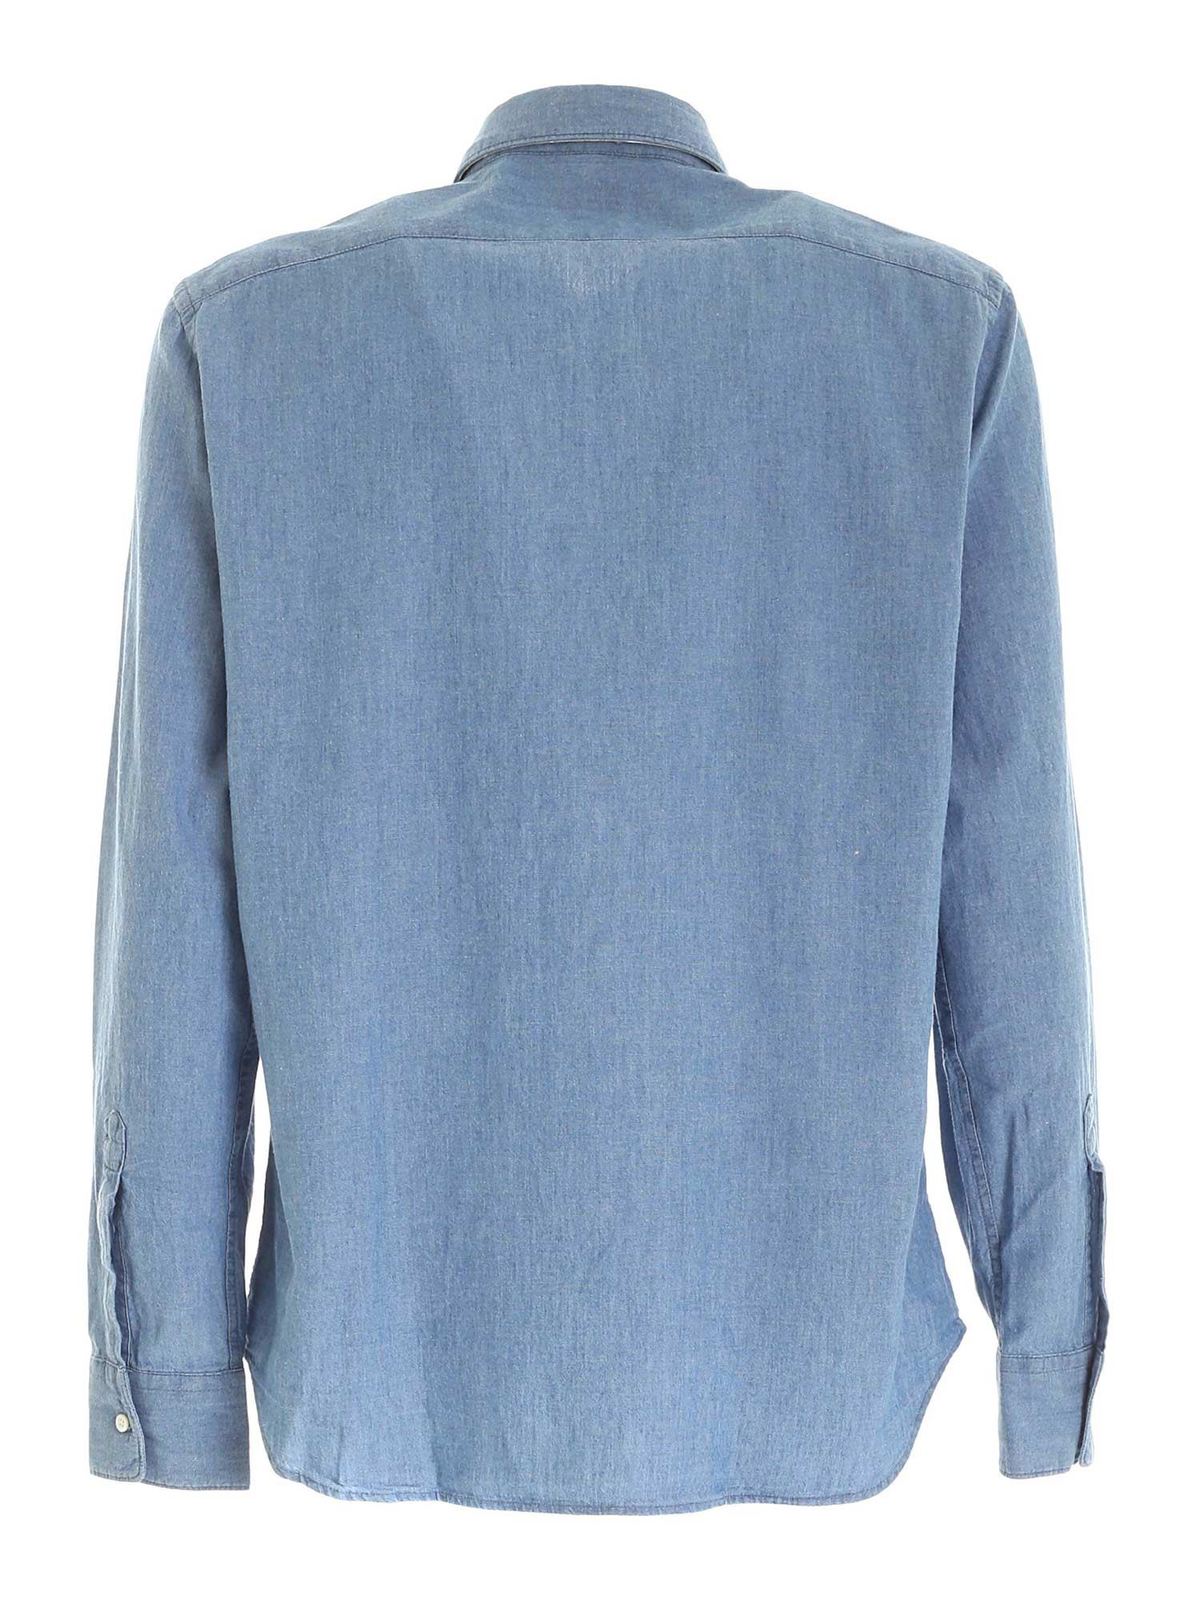 Shop Aspesi Camisa - Sedici In Light Blue